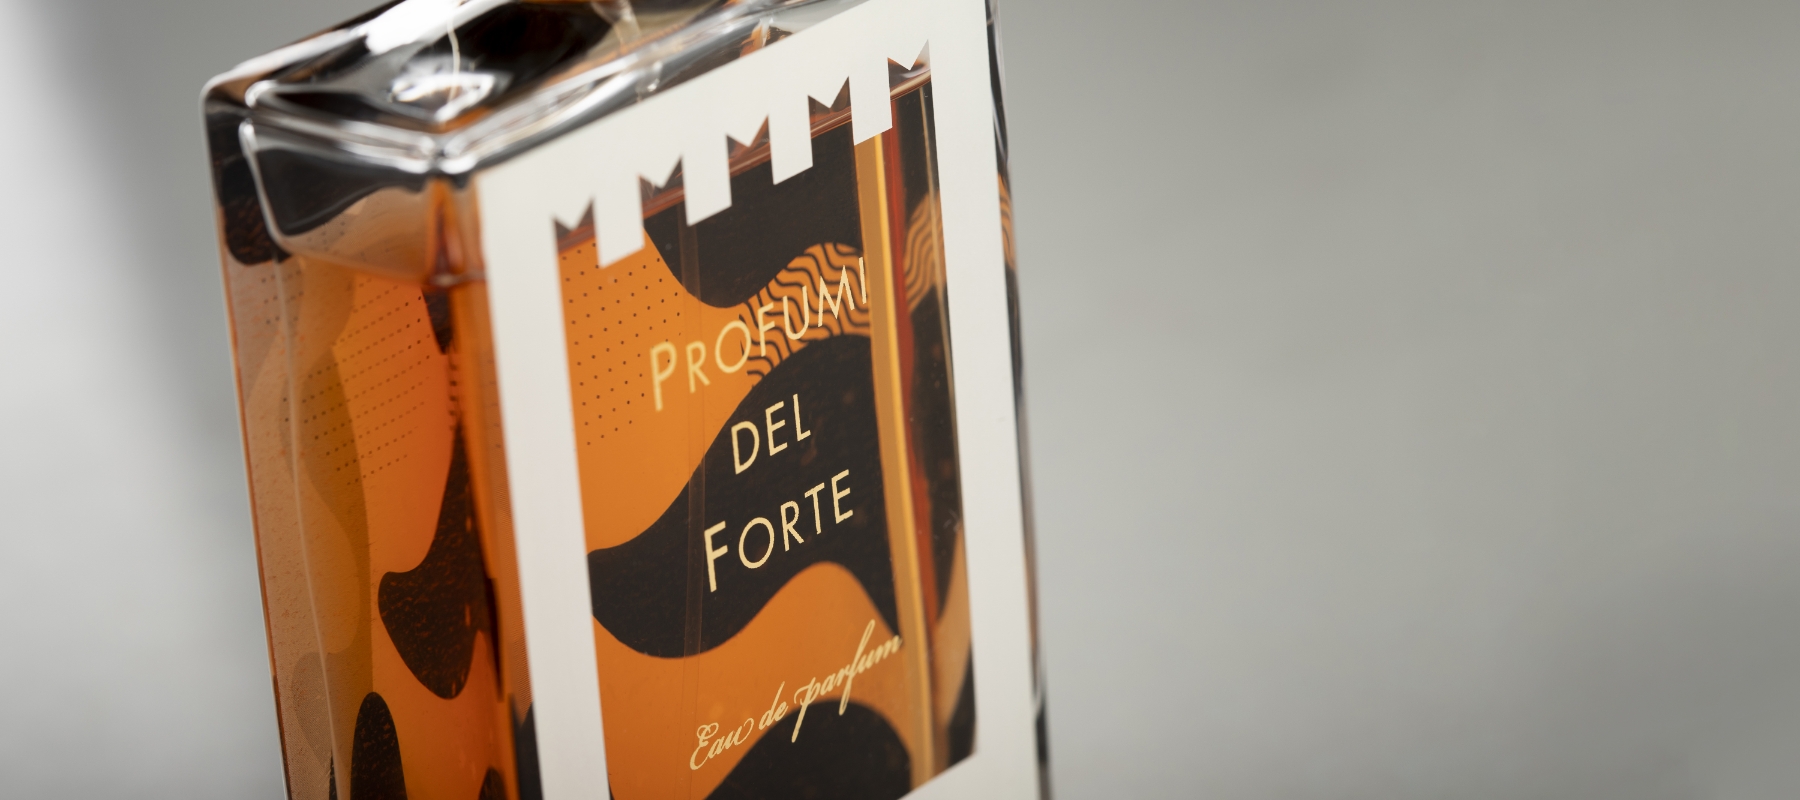 The Story of Torre's Corpi Caldi Perfume